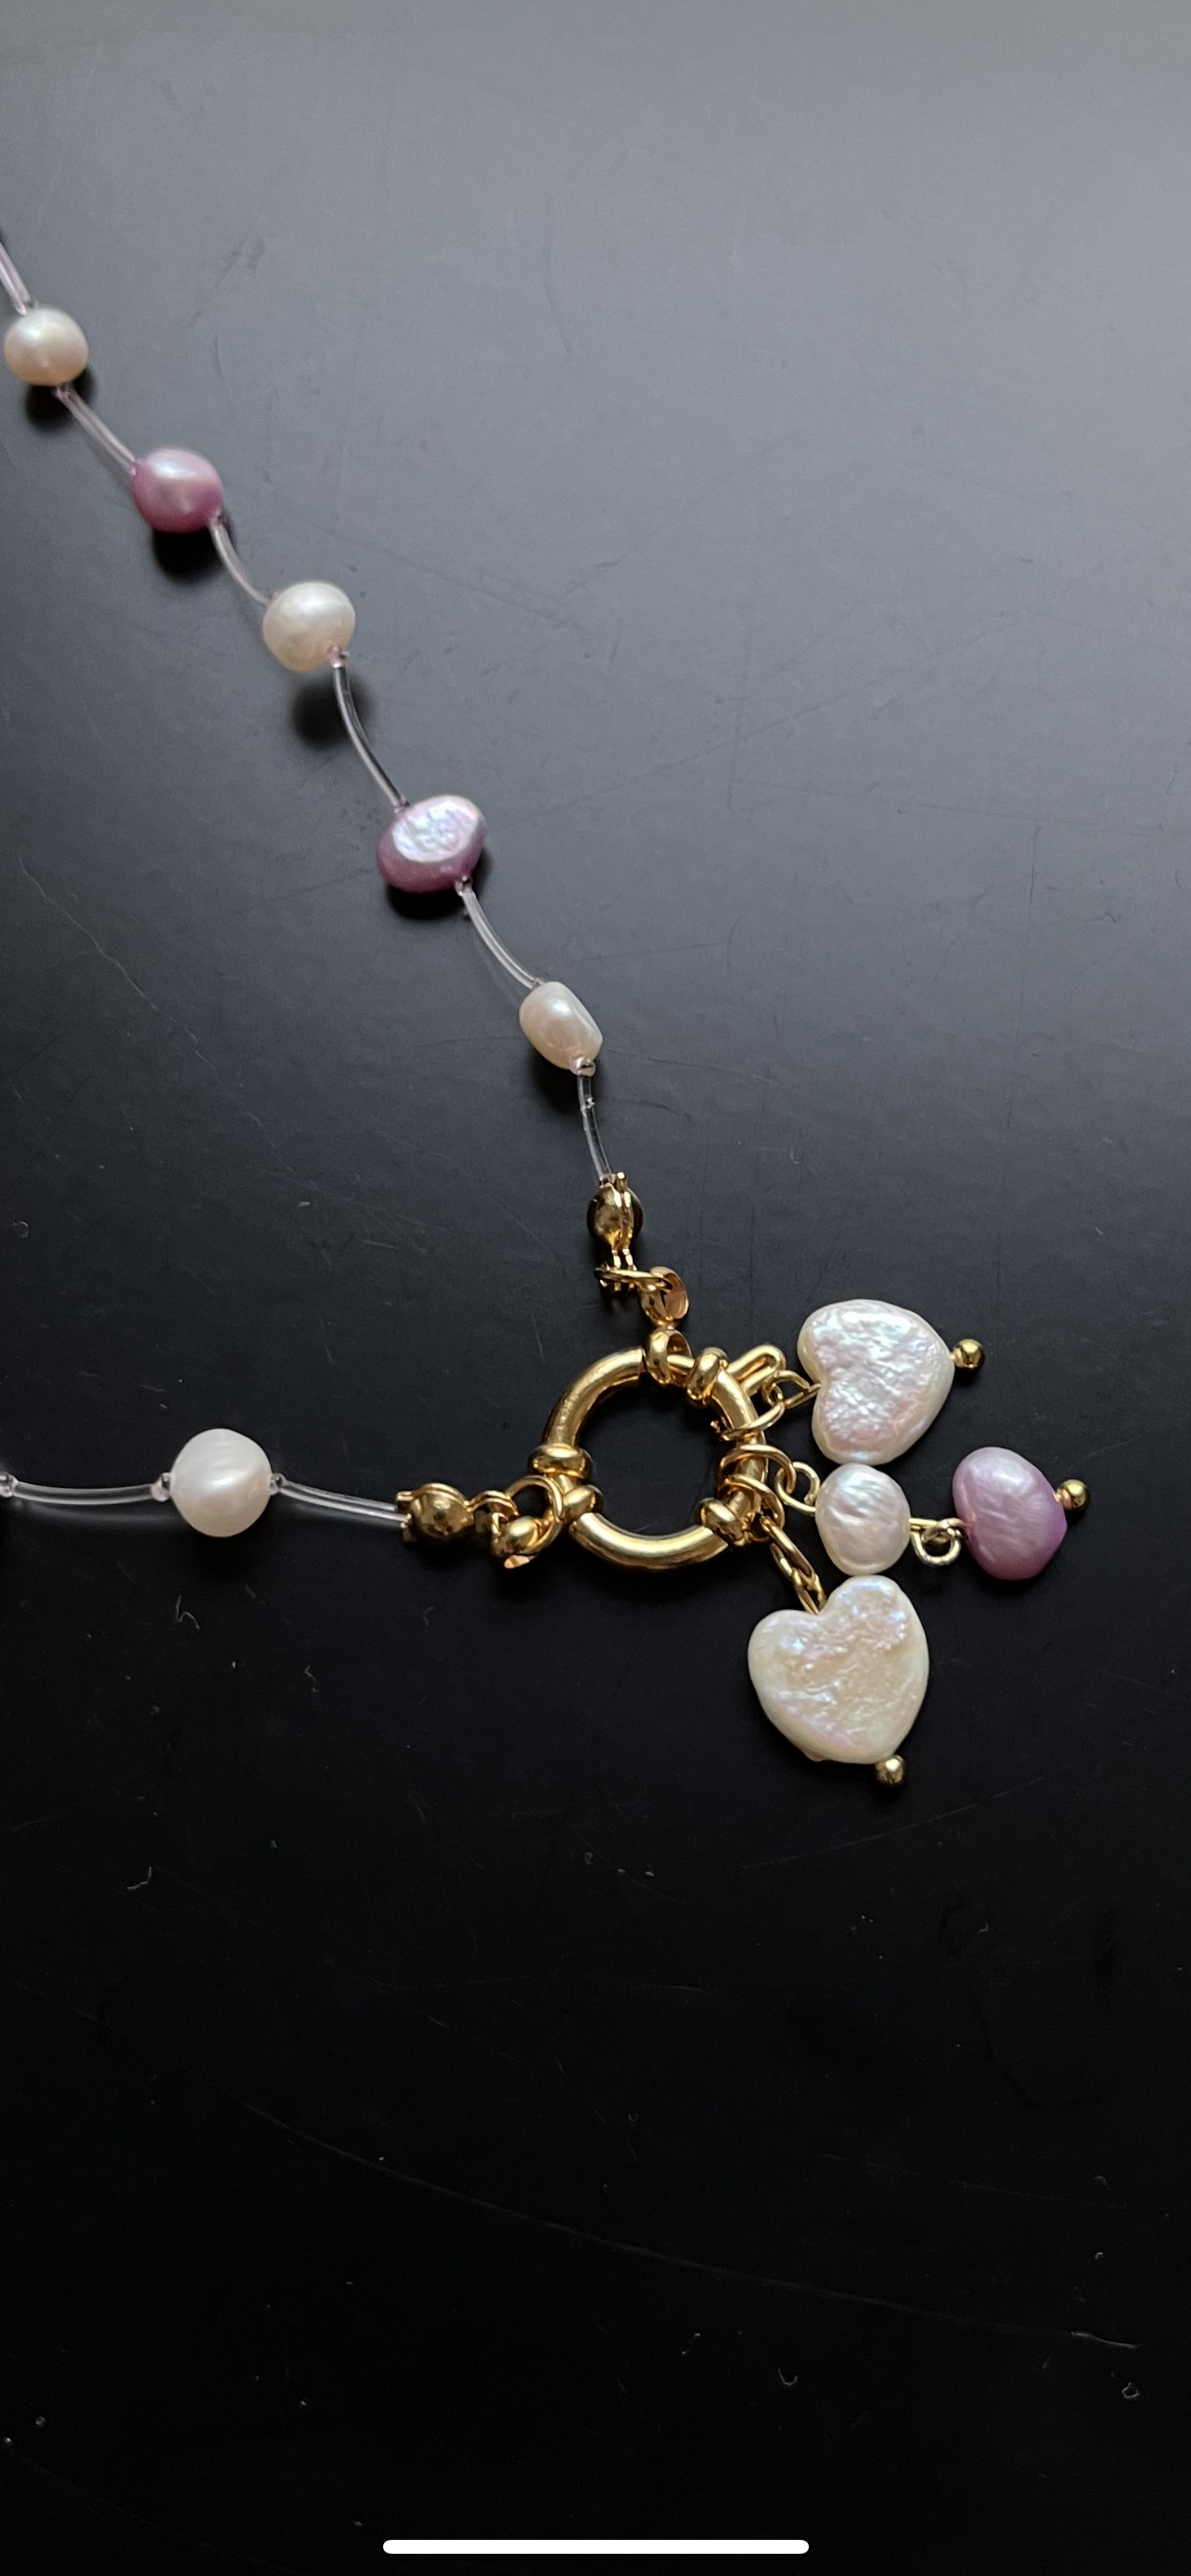 The “Mia” Necklace